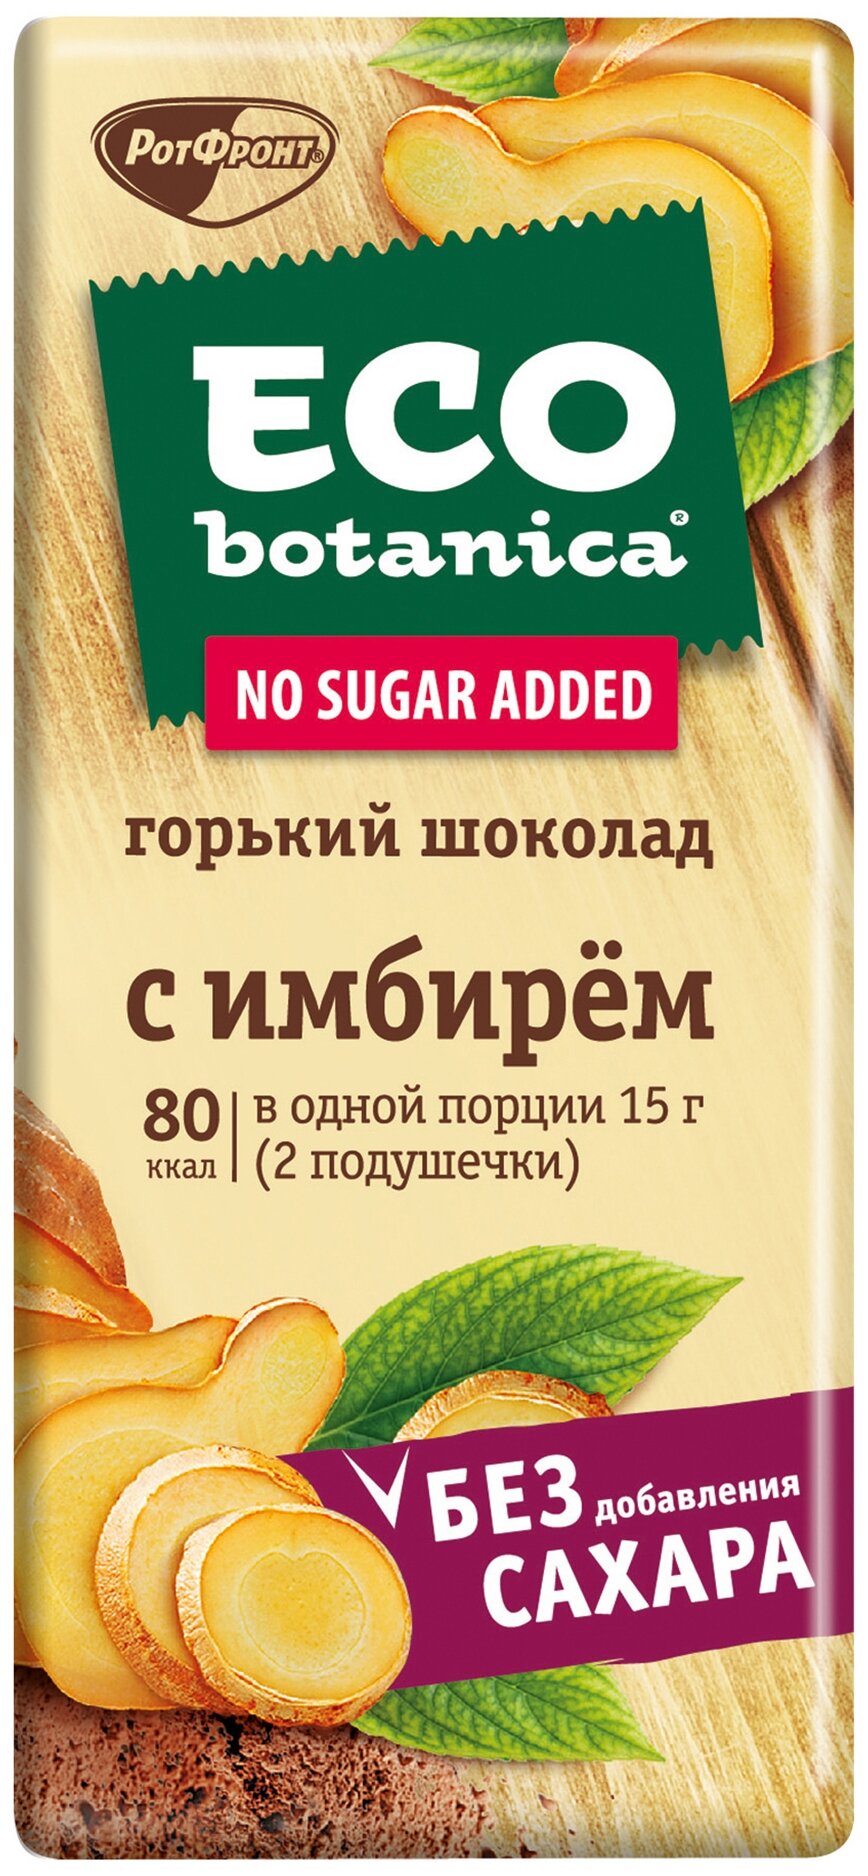 Eco botanica "С имбирем" - вид шоколада: горький